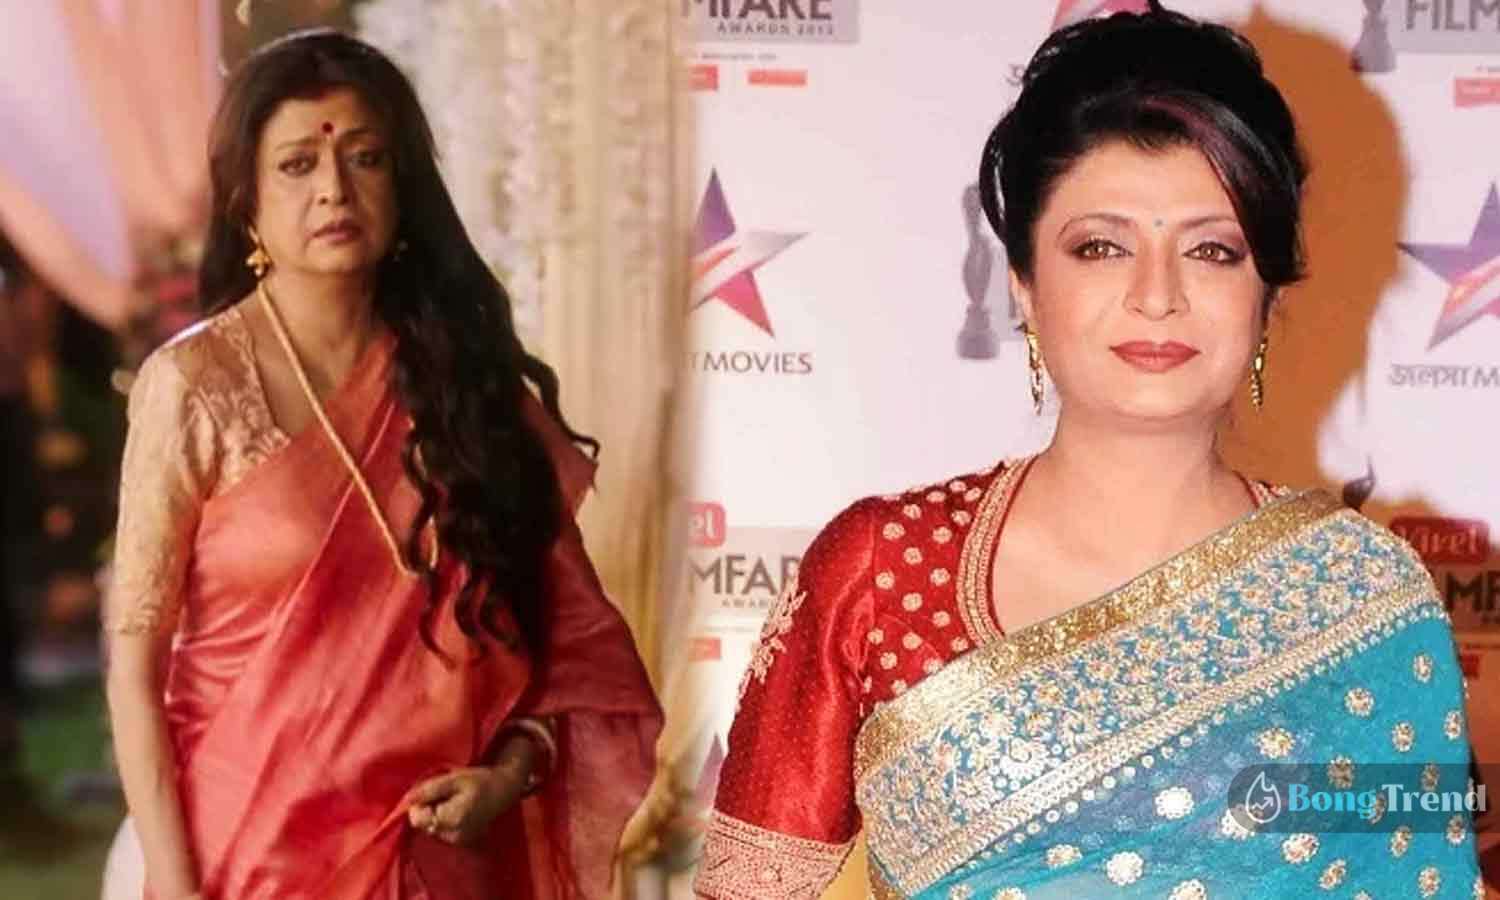 Debashree Roy,দেবশ্রী রায়,Sarbajaya,Serial,সর্বজয়া,সিরিয়াল,Zee Bangla,Bengali Seiral,জি বাংলা,Debashree Roy comeback in acting with Sarbajaya Serial